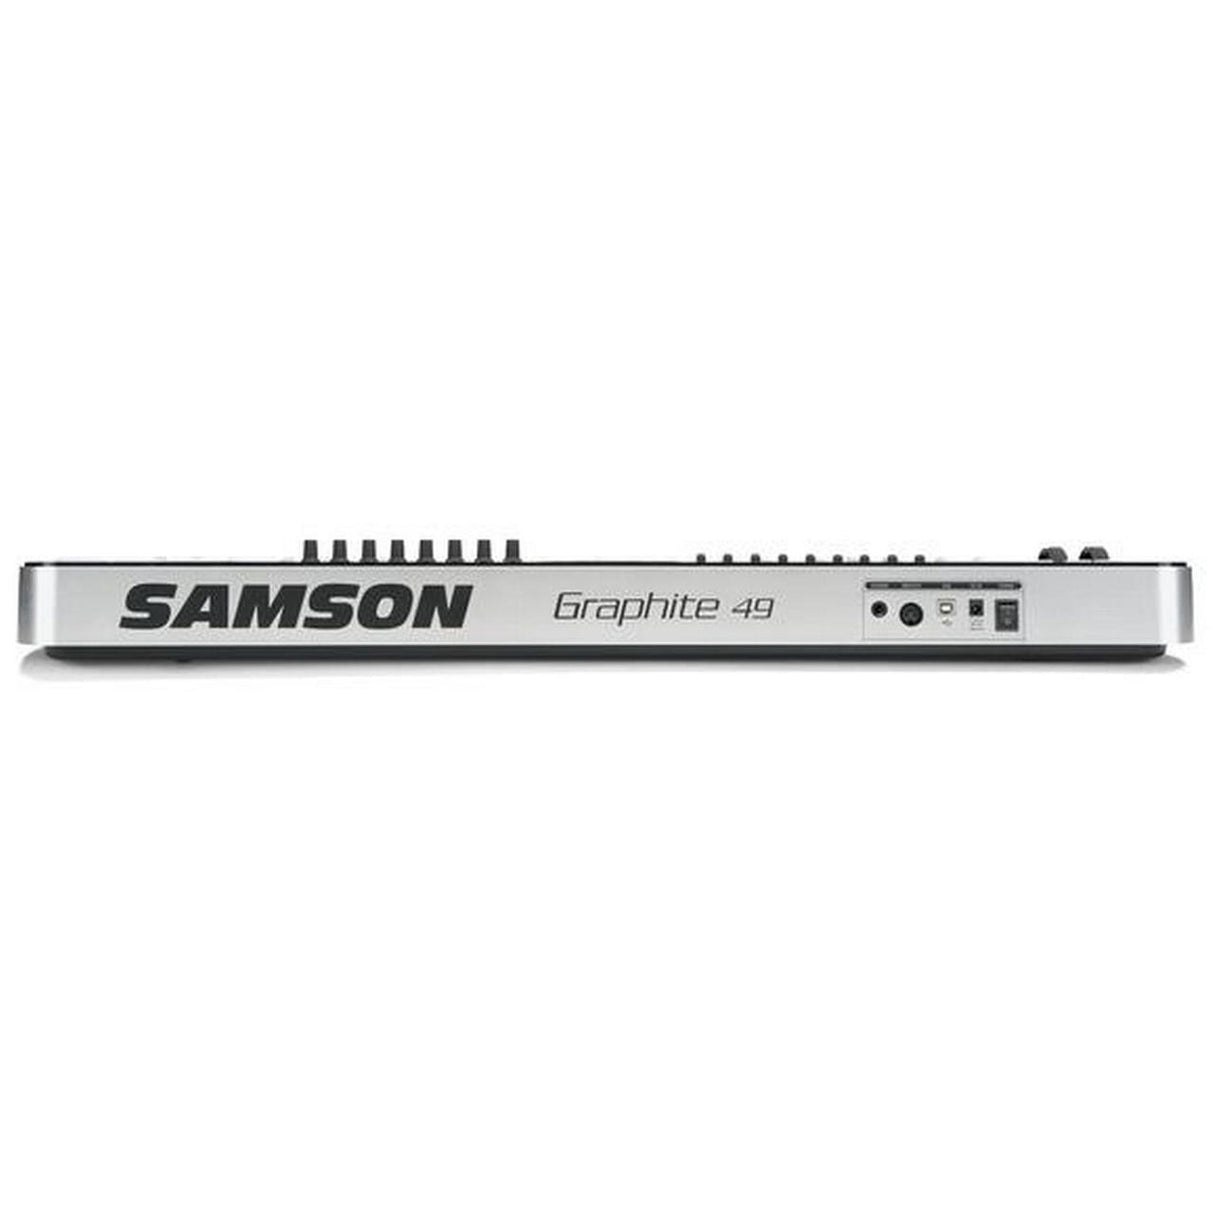 Samson Graphite 49 | 49 Key USB MIDI Controller